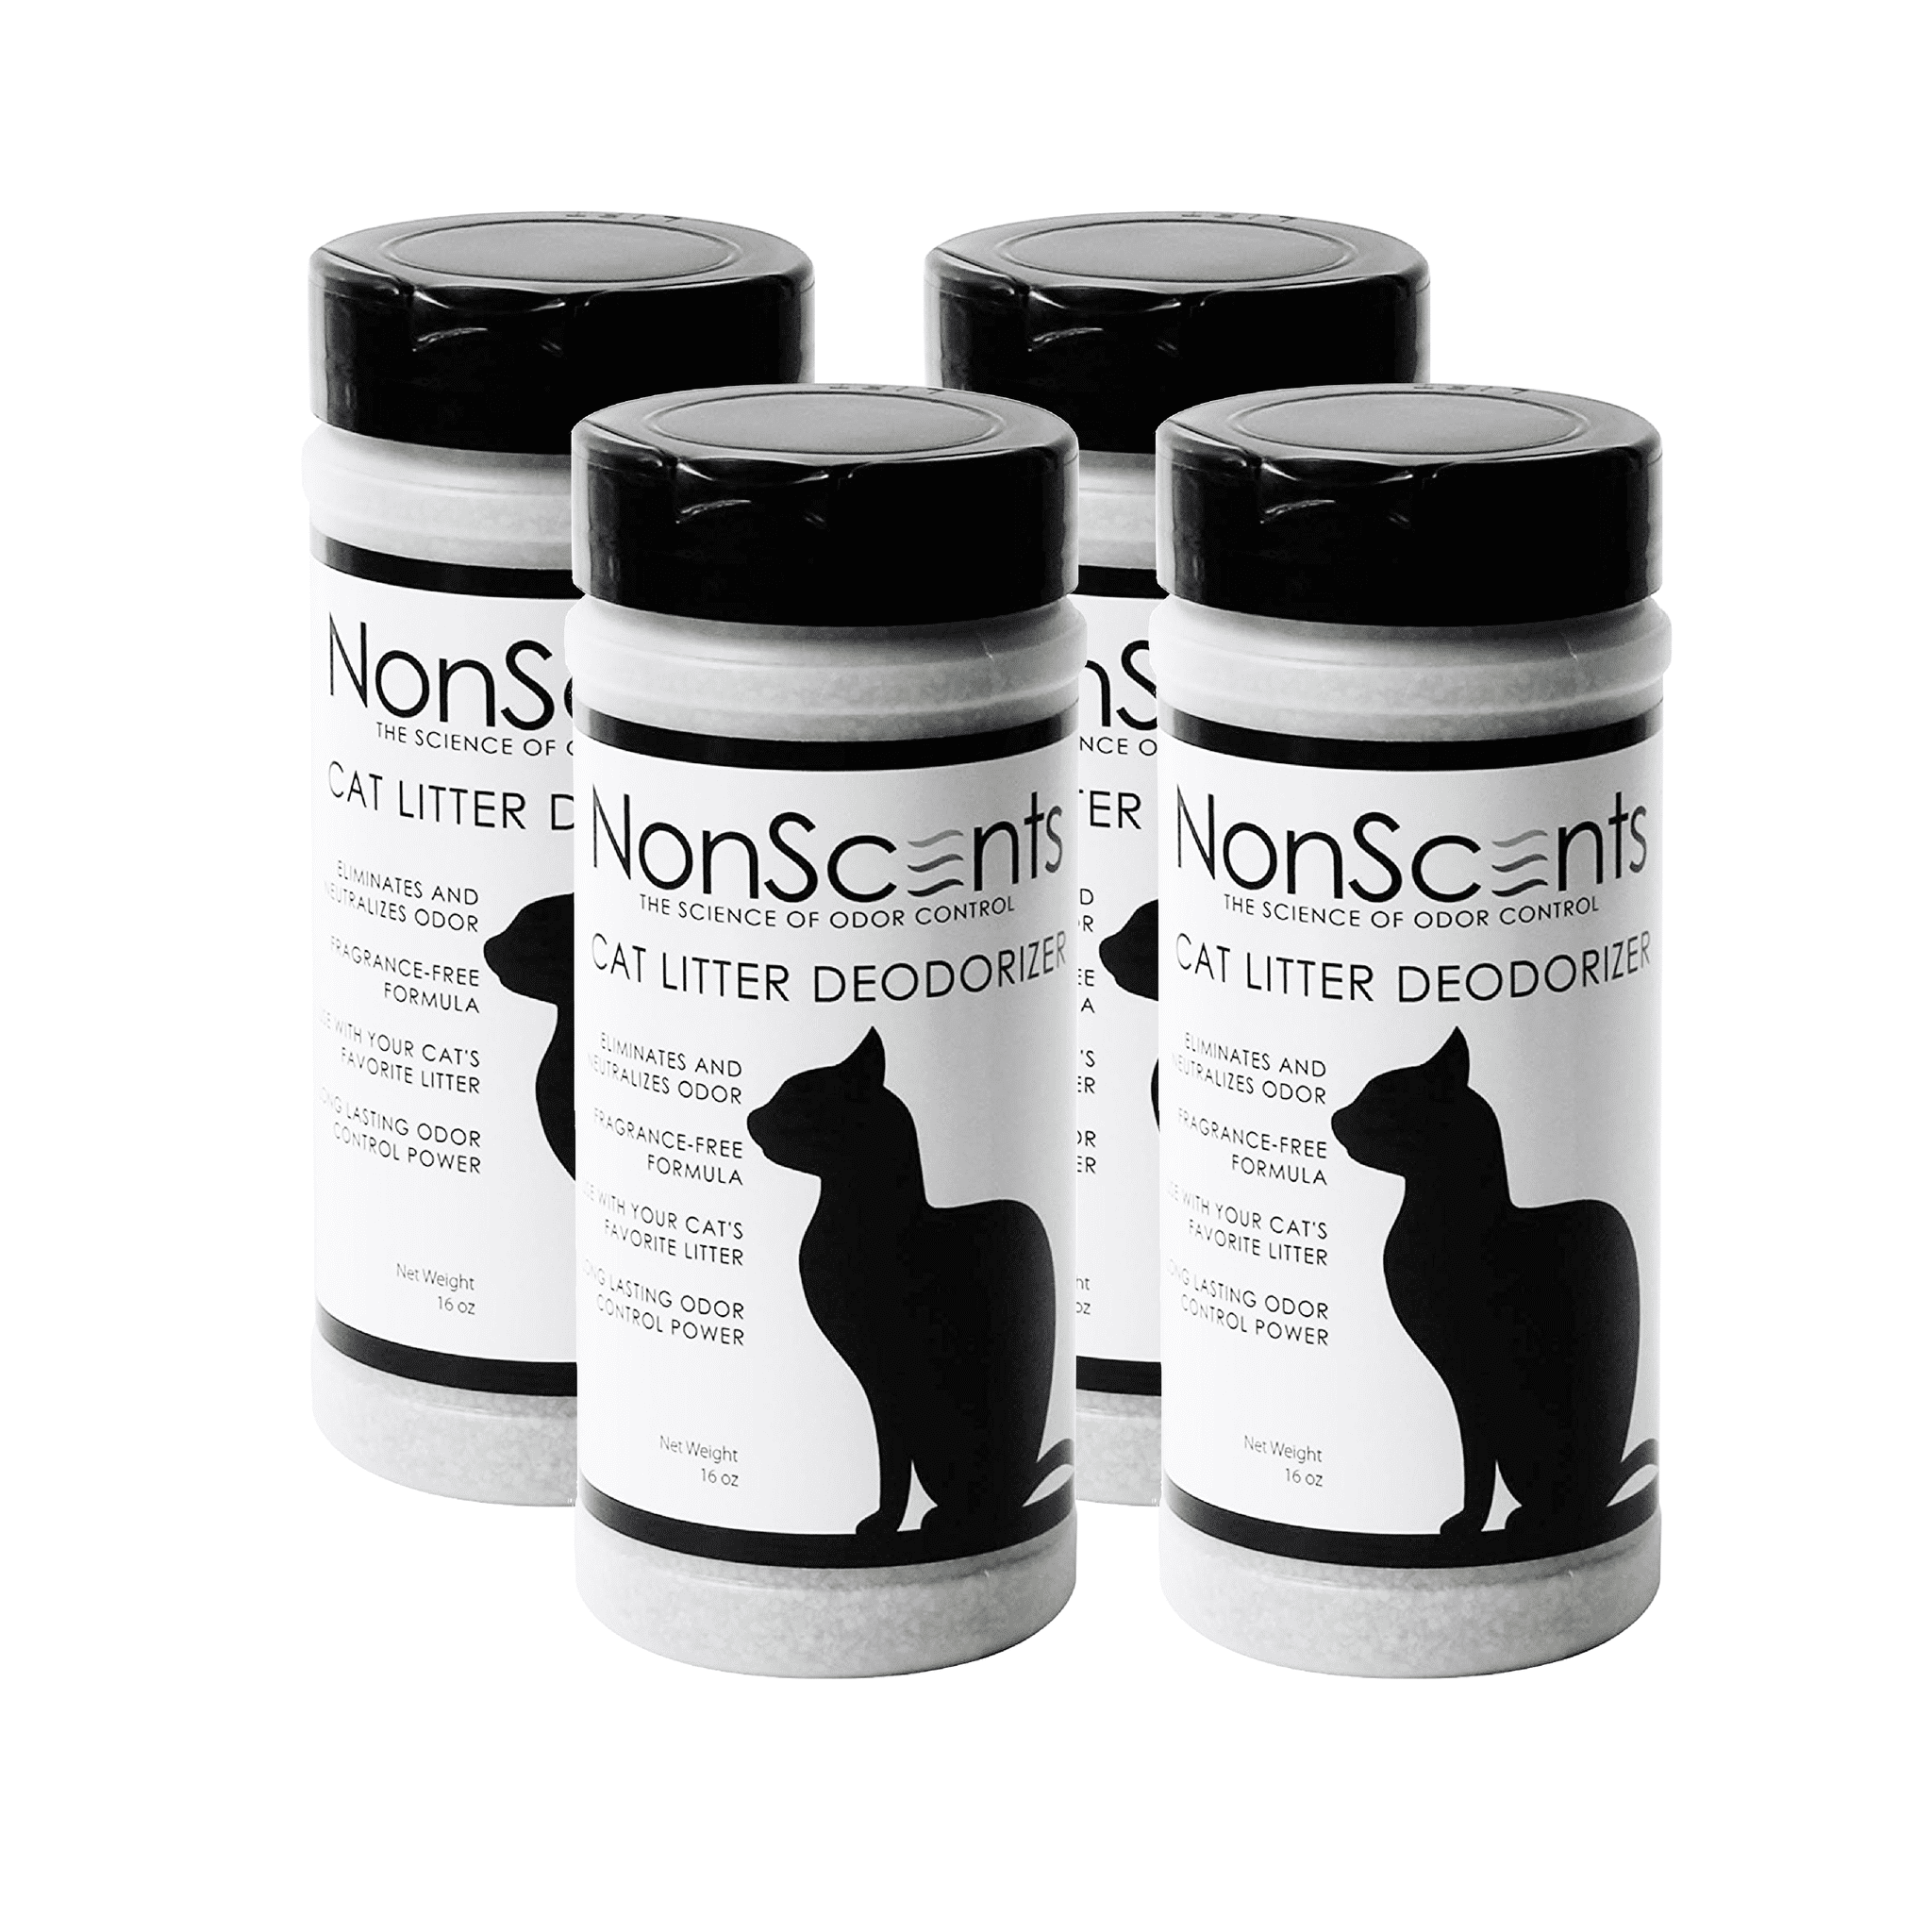 NonScents Cat Litter Deodorizer Completely Eliminates Cat Litter Odor